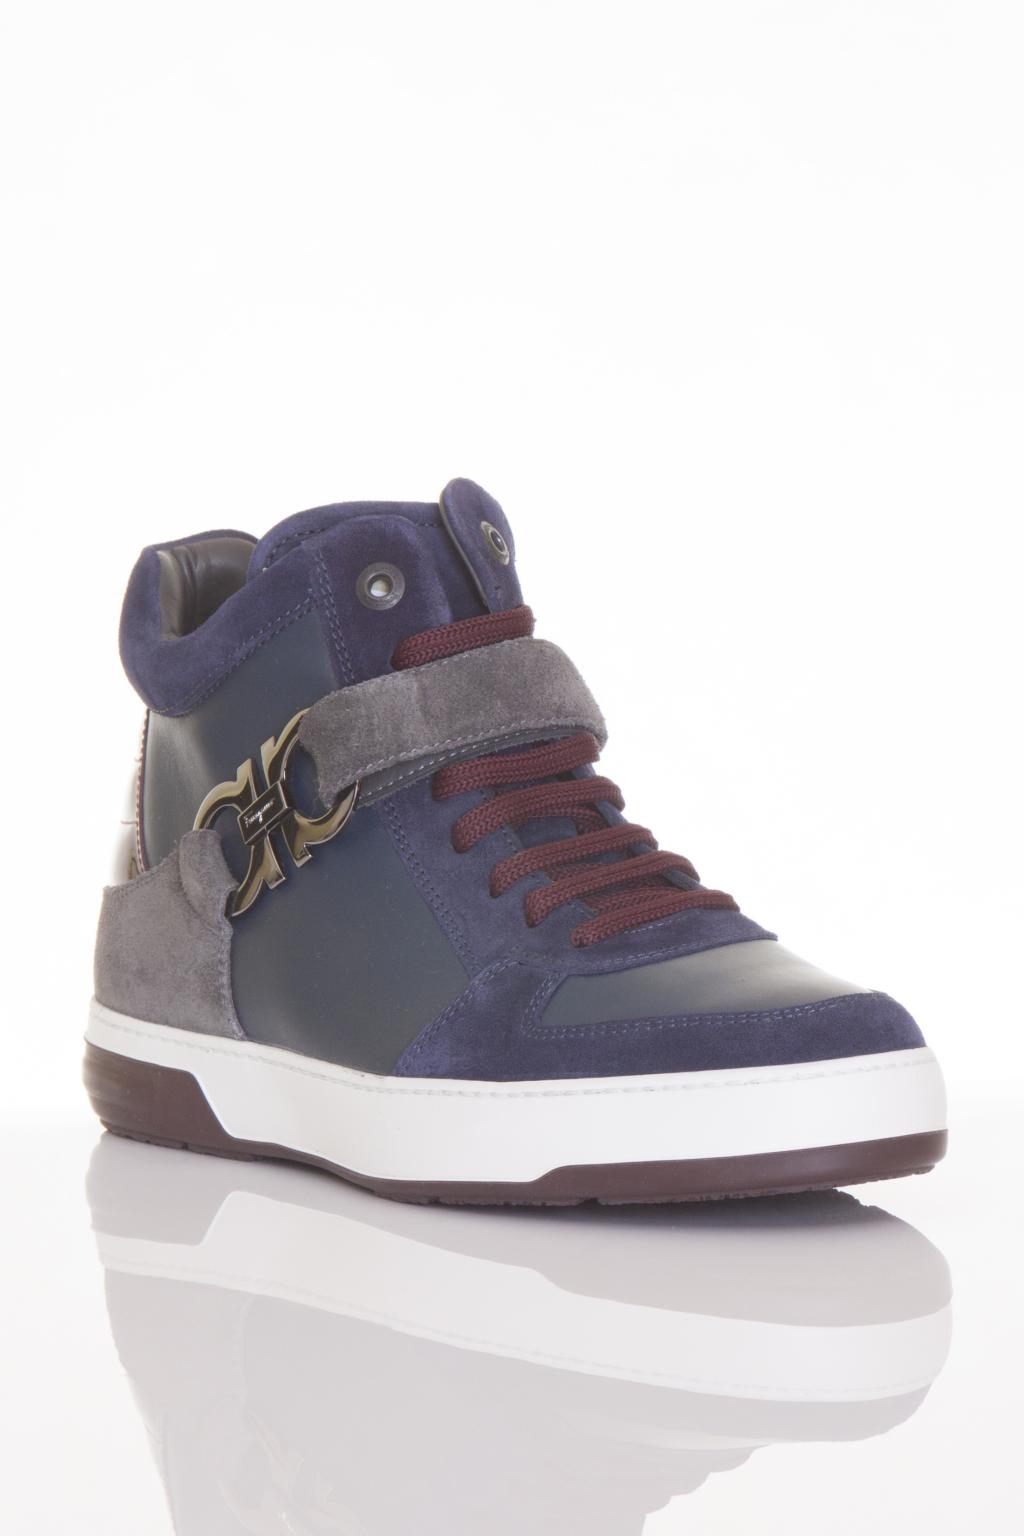 Ferragamo Men's Nima Knit Lace Up Sneakers - Blue - Size 10.5 - Denim